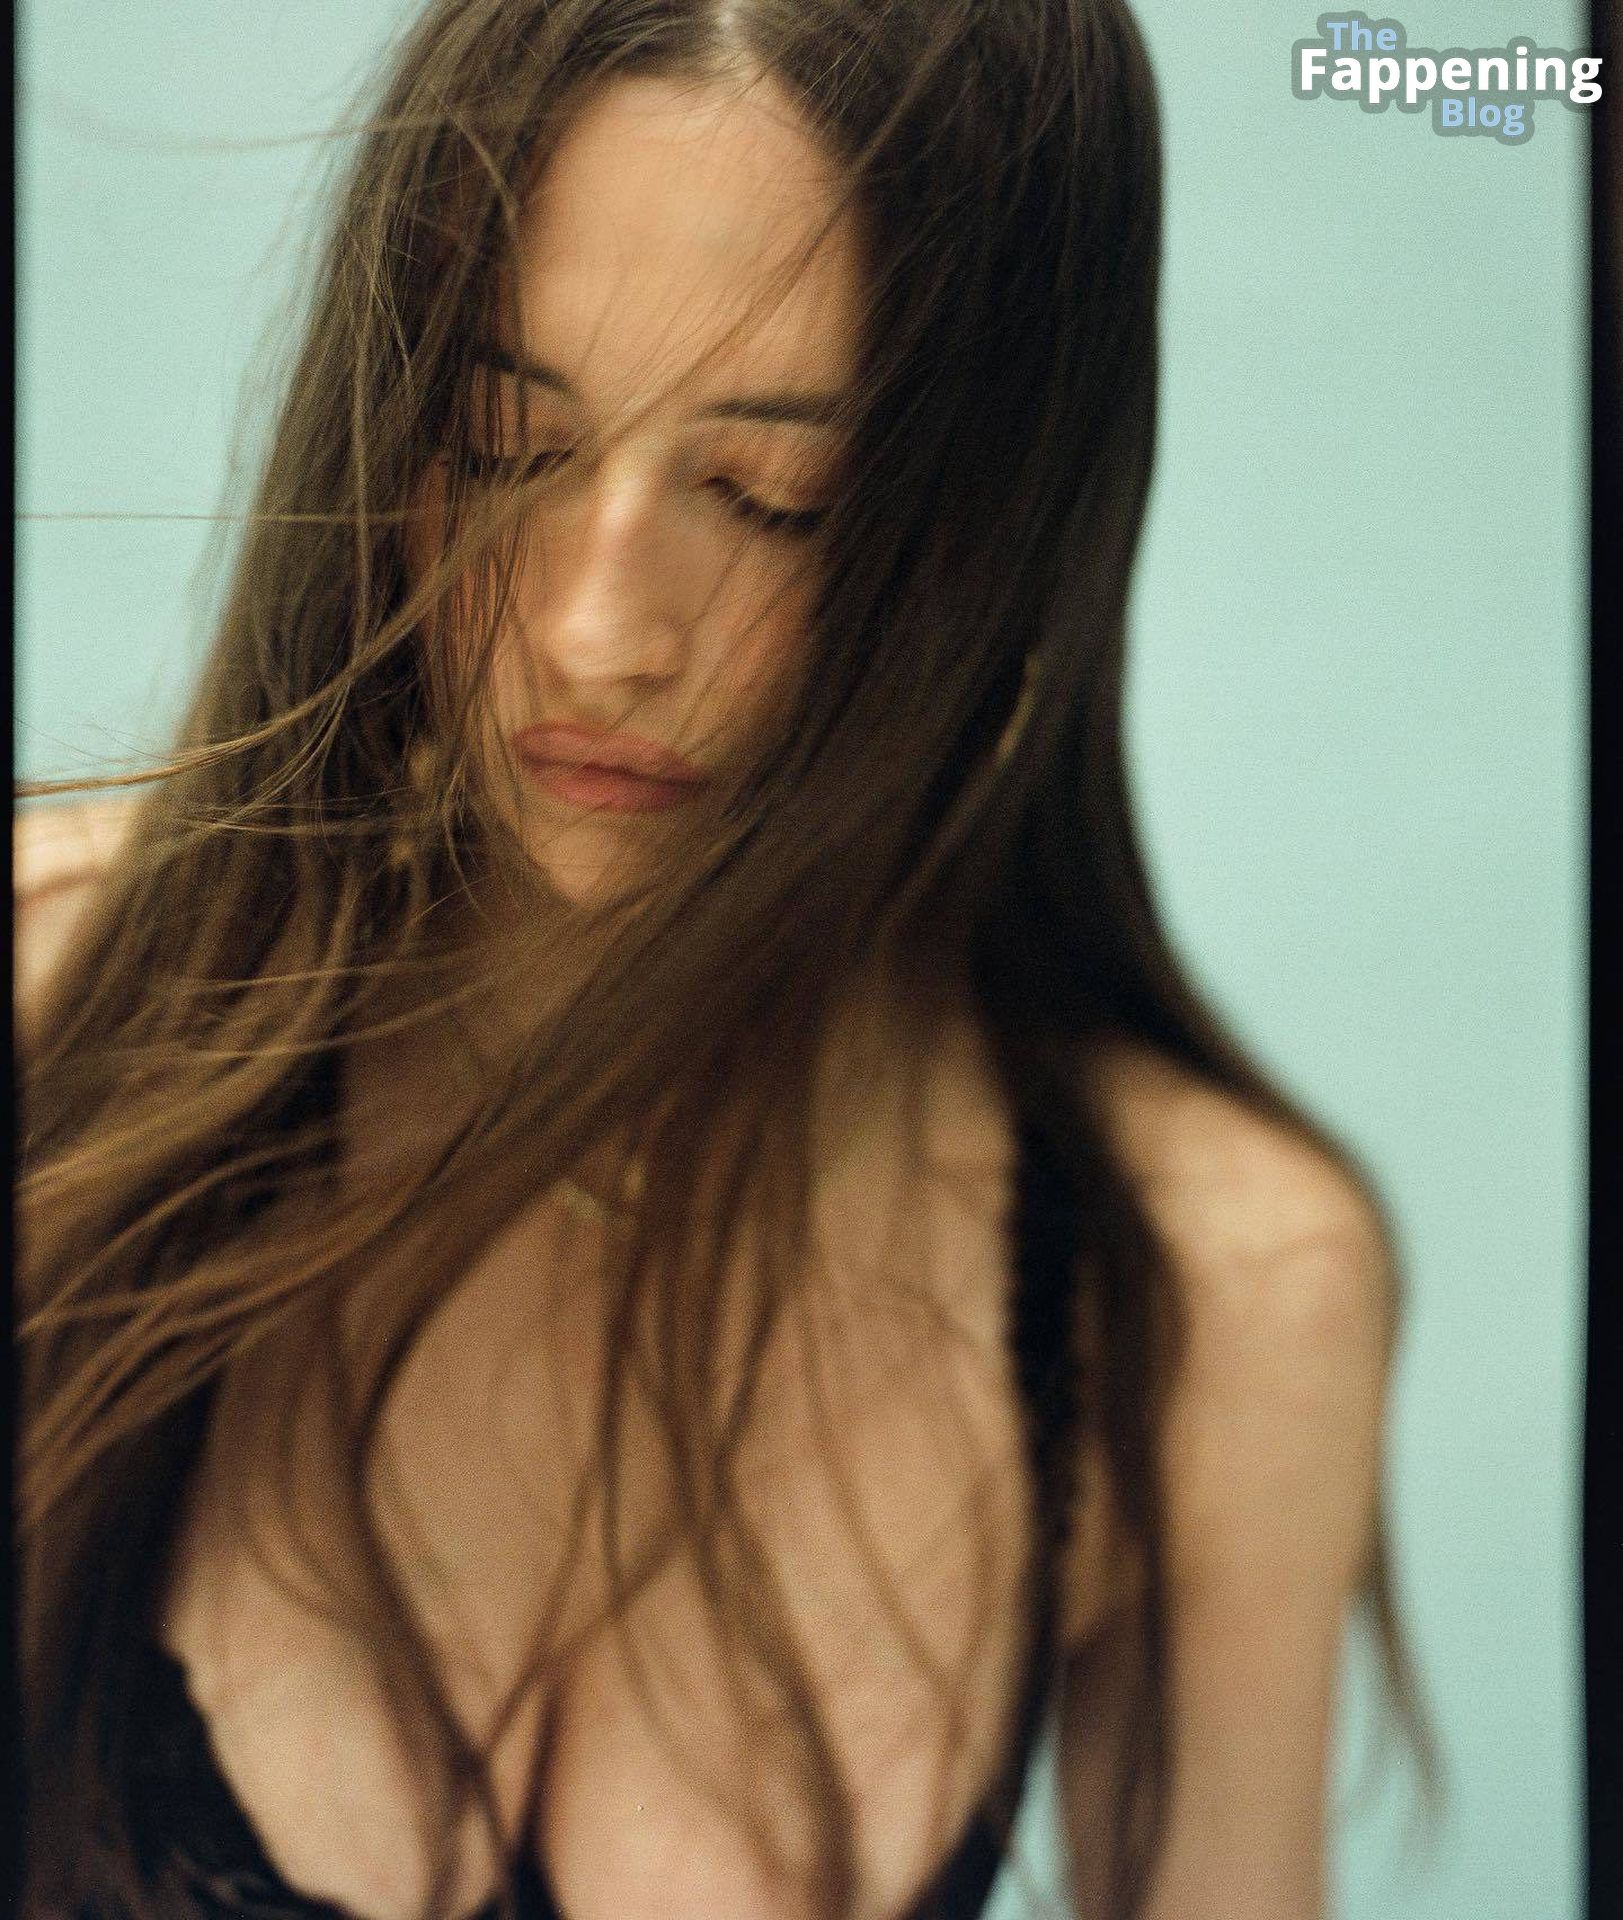 Elsie Hewitt Displays Her Sexy Boobs in a New Shoot by Jordan Owen (9 Photos)